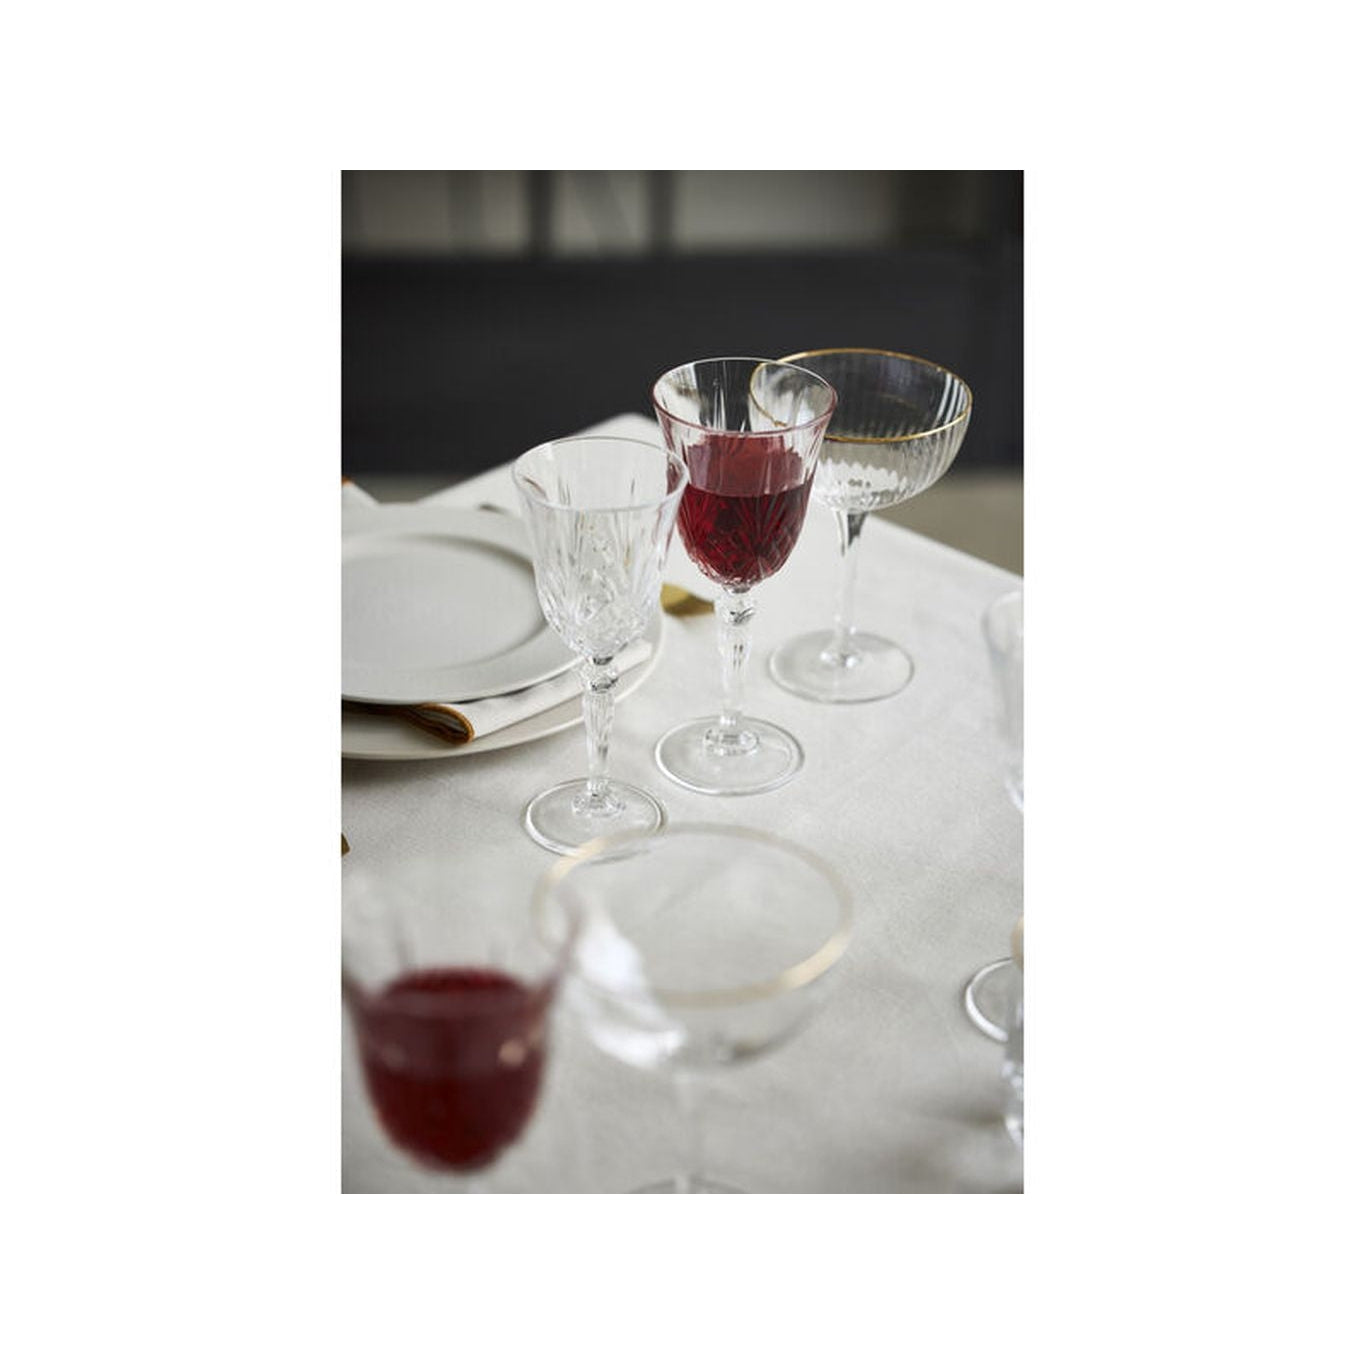 Lyngby Glas Melodia Krystal Red Wine Glass 27 Cl, 4 Pcs.